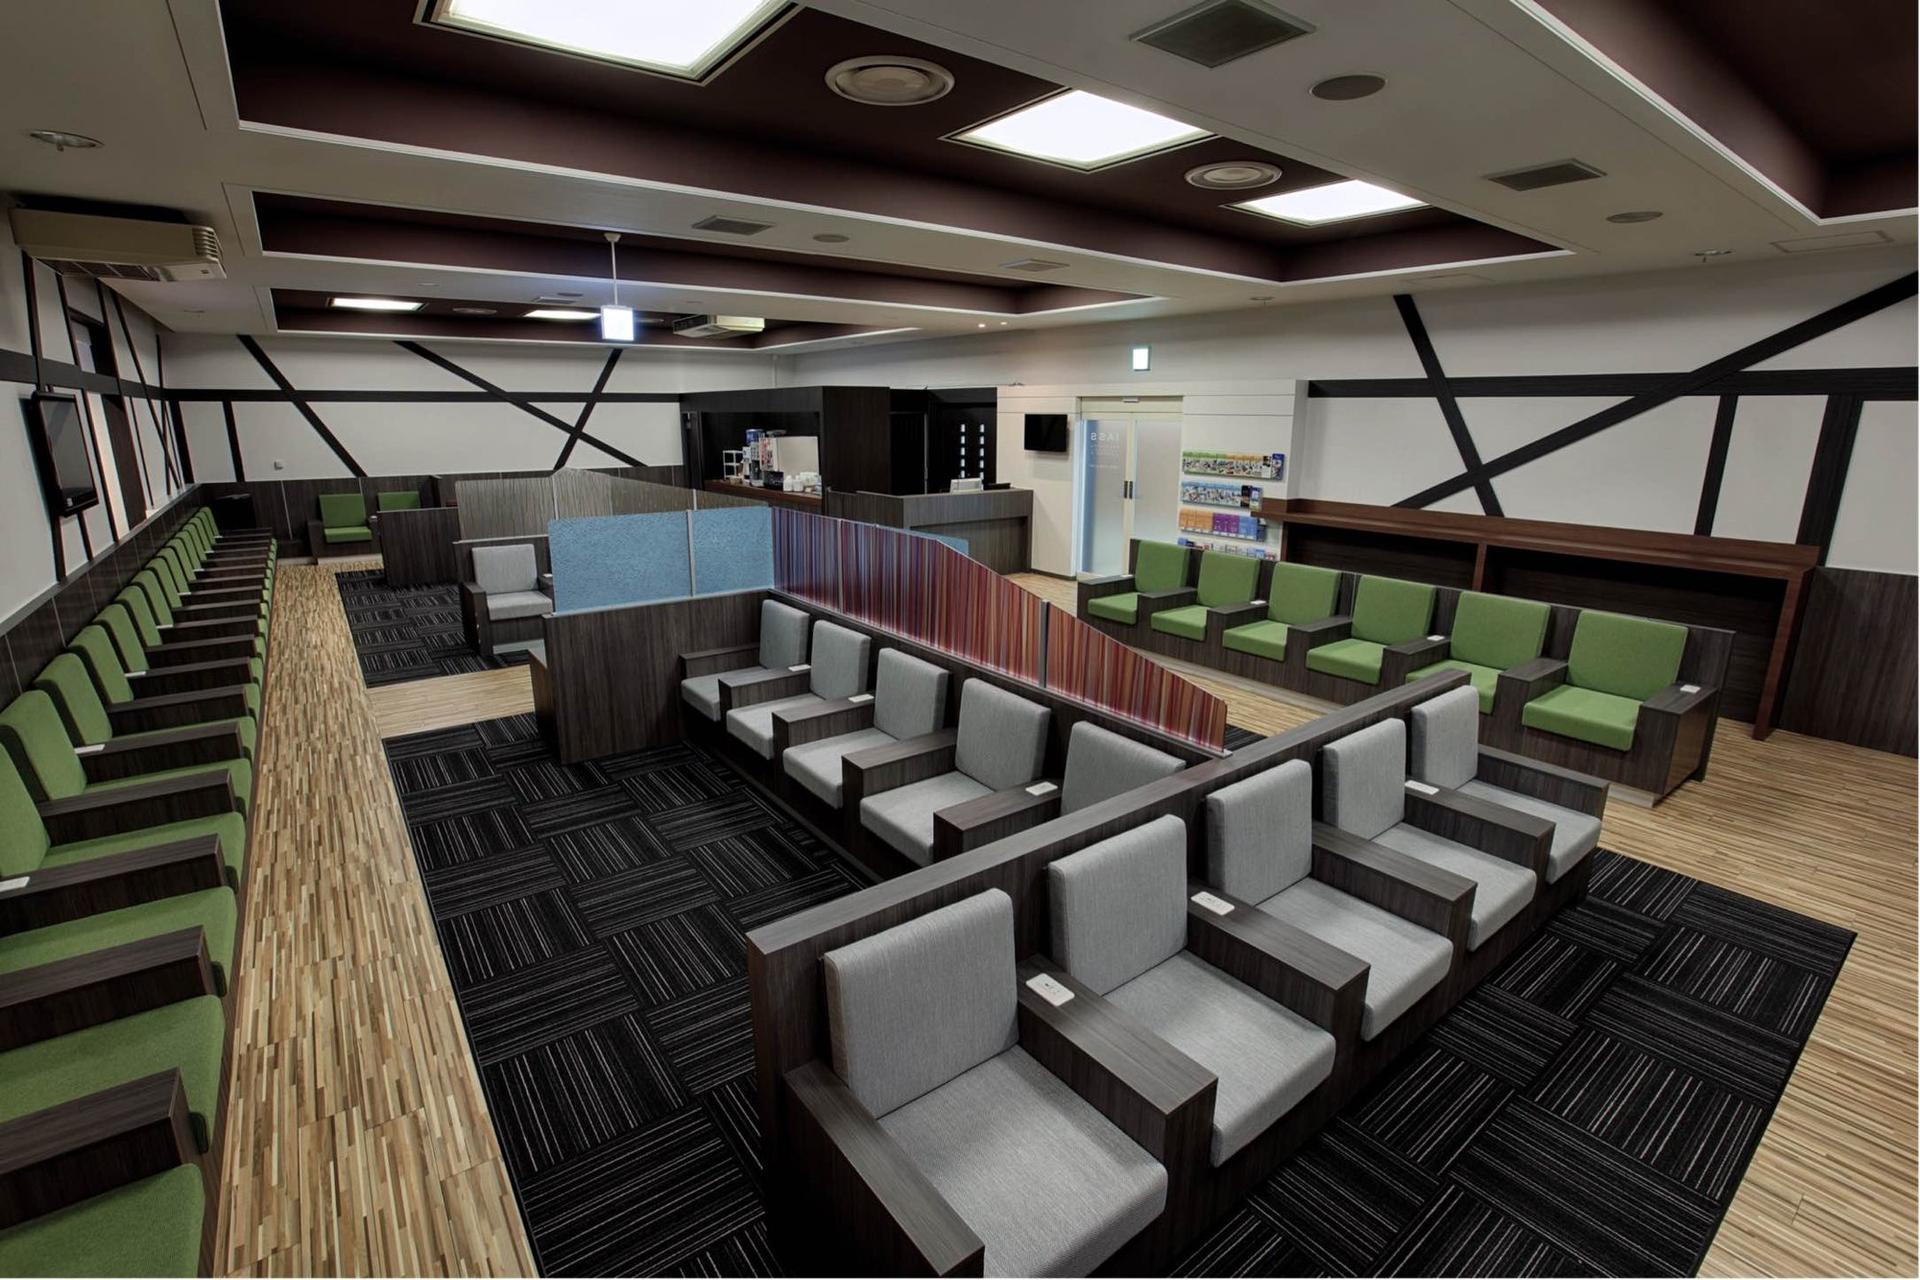 IASS Executive Lounge image 7 of 16